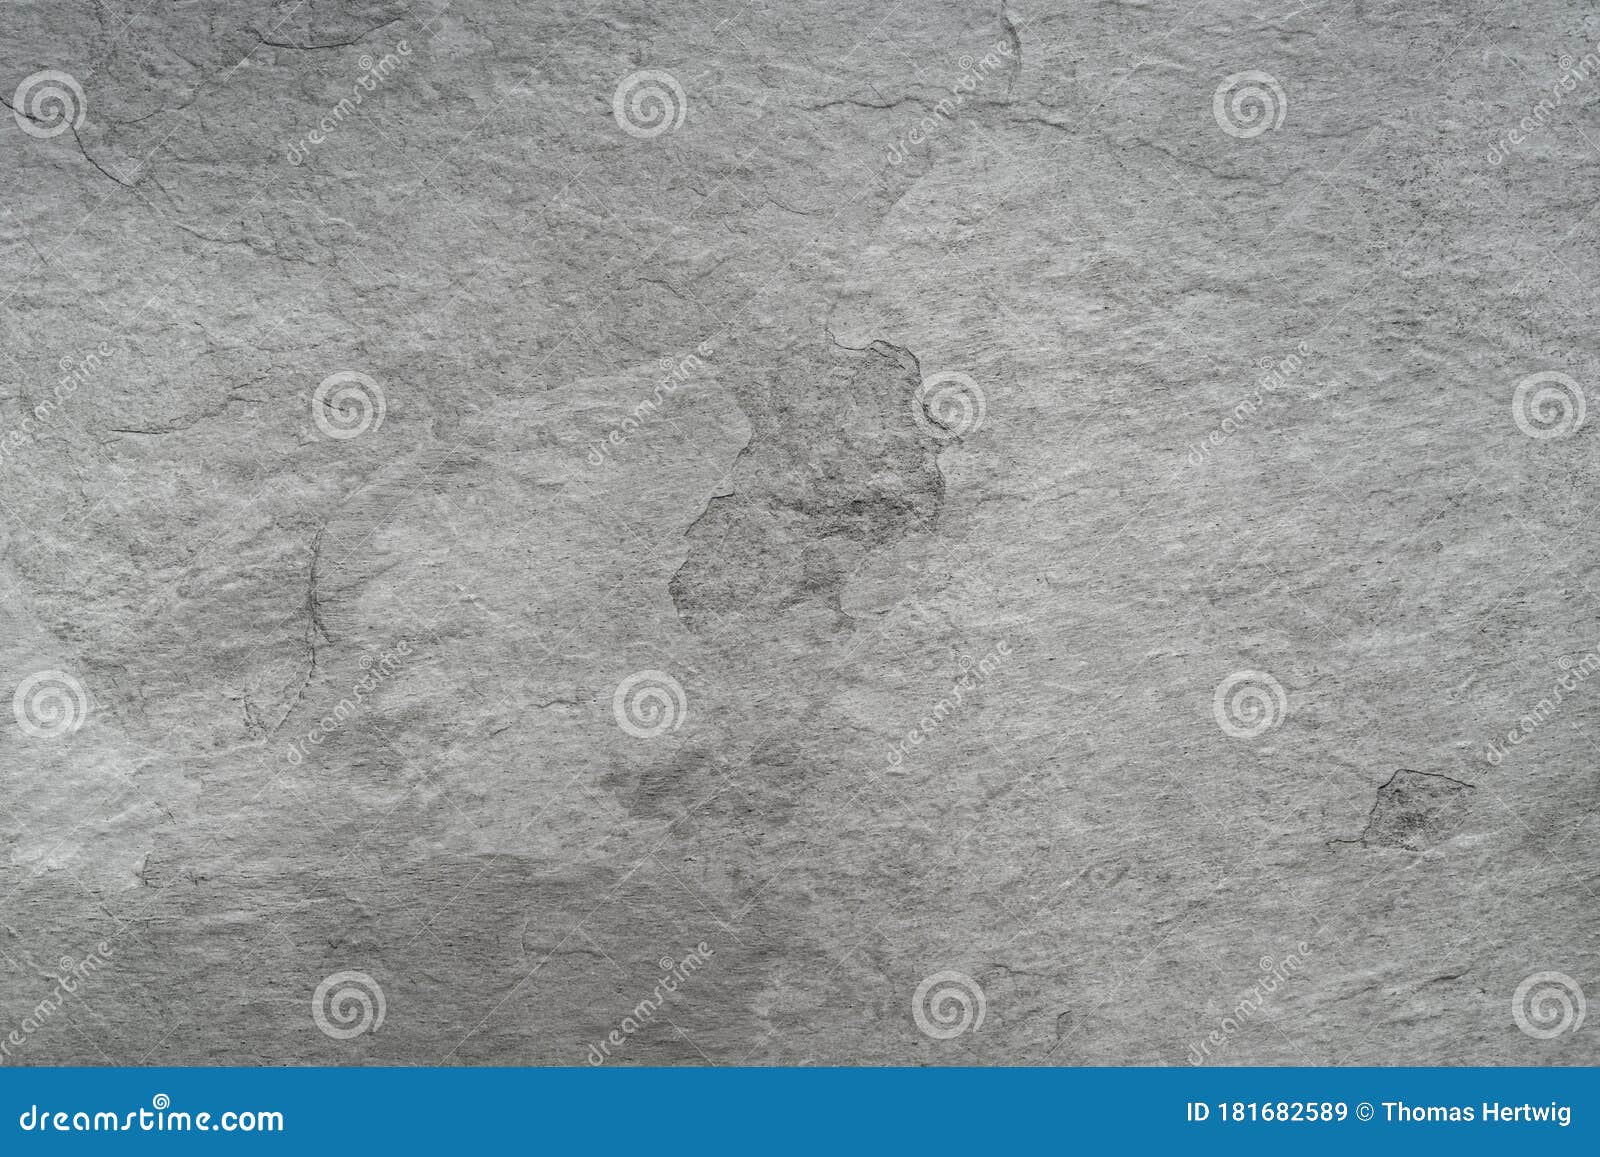 grey black slate stone background or texture